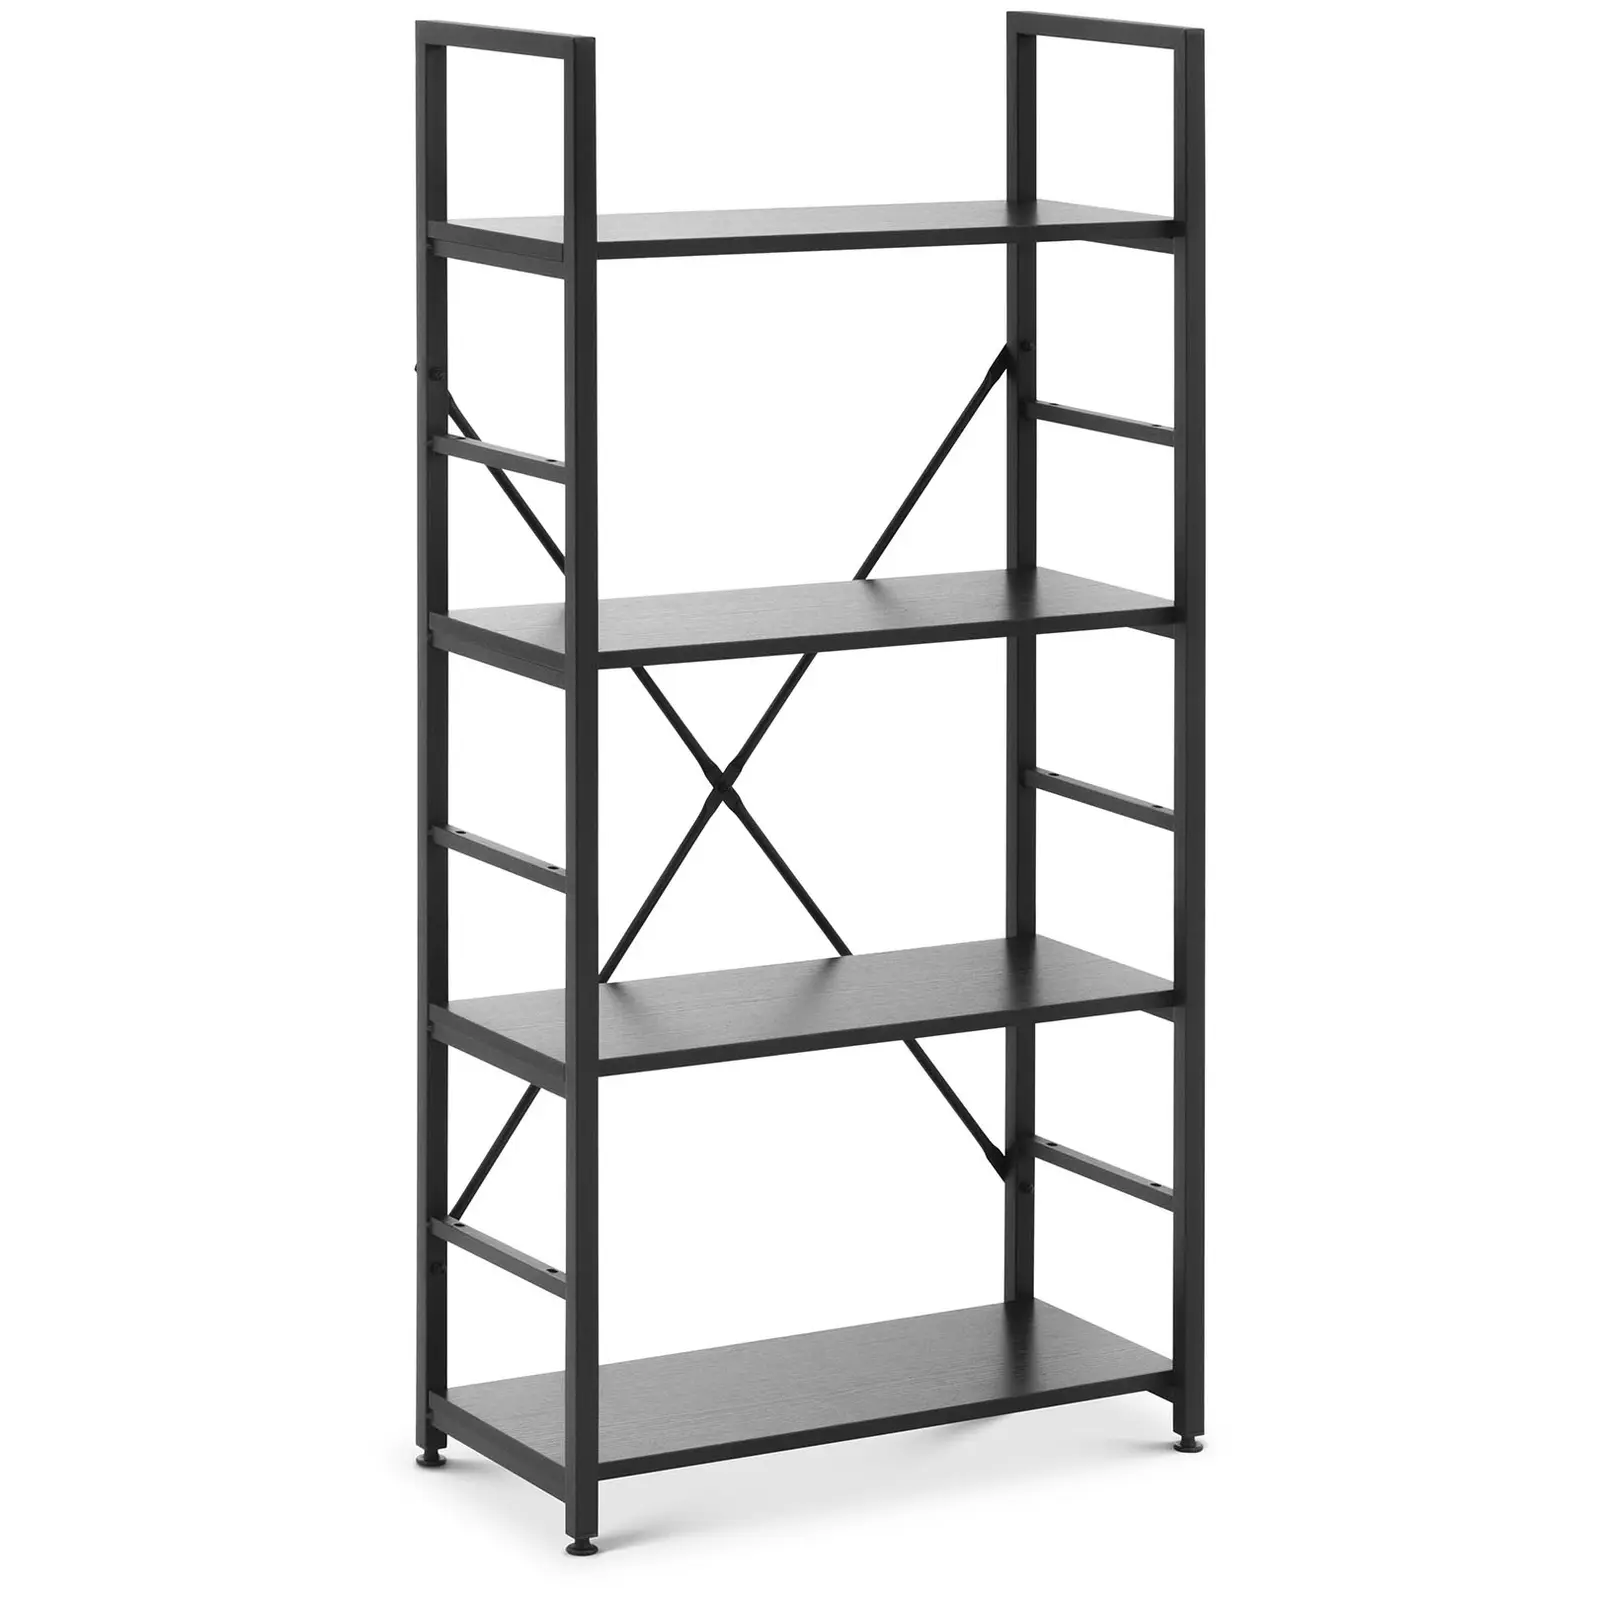 Bookshelf - 60 x 28 x 125 cm - 150 kg - black